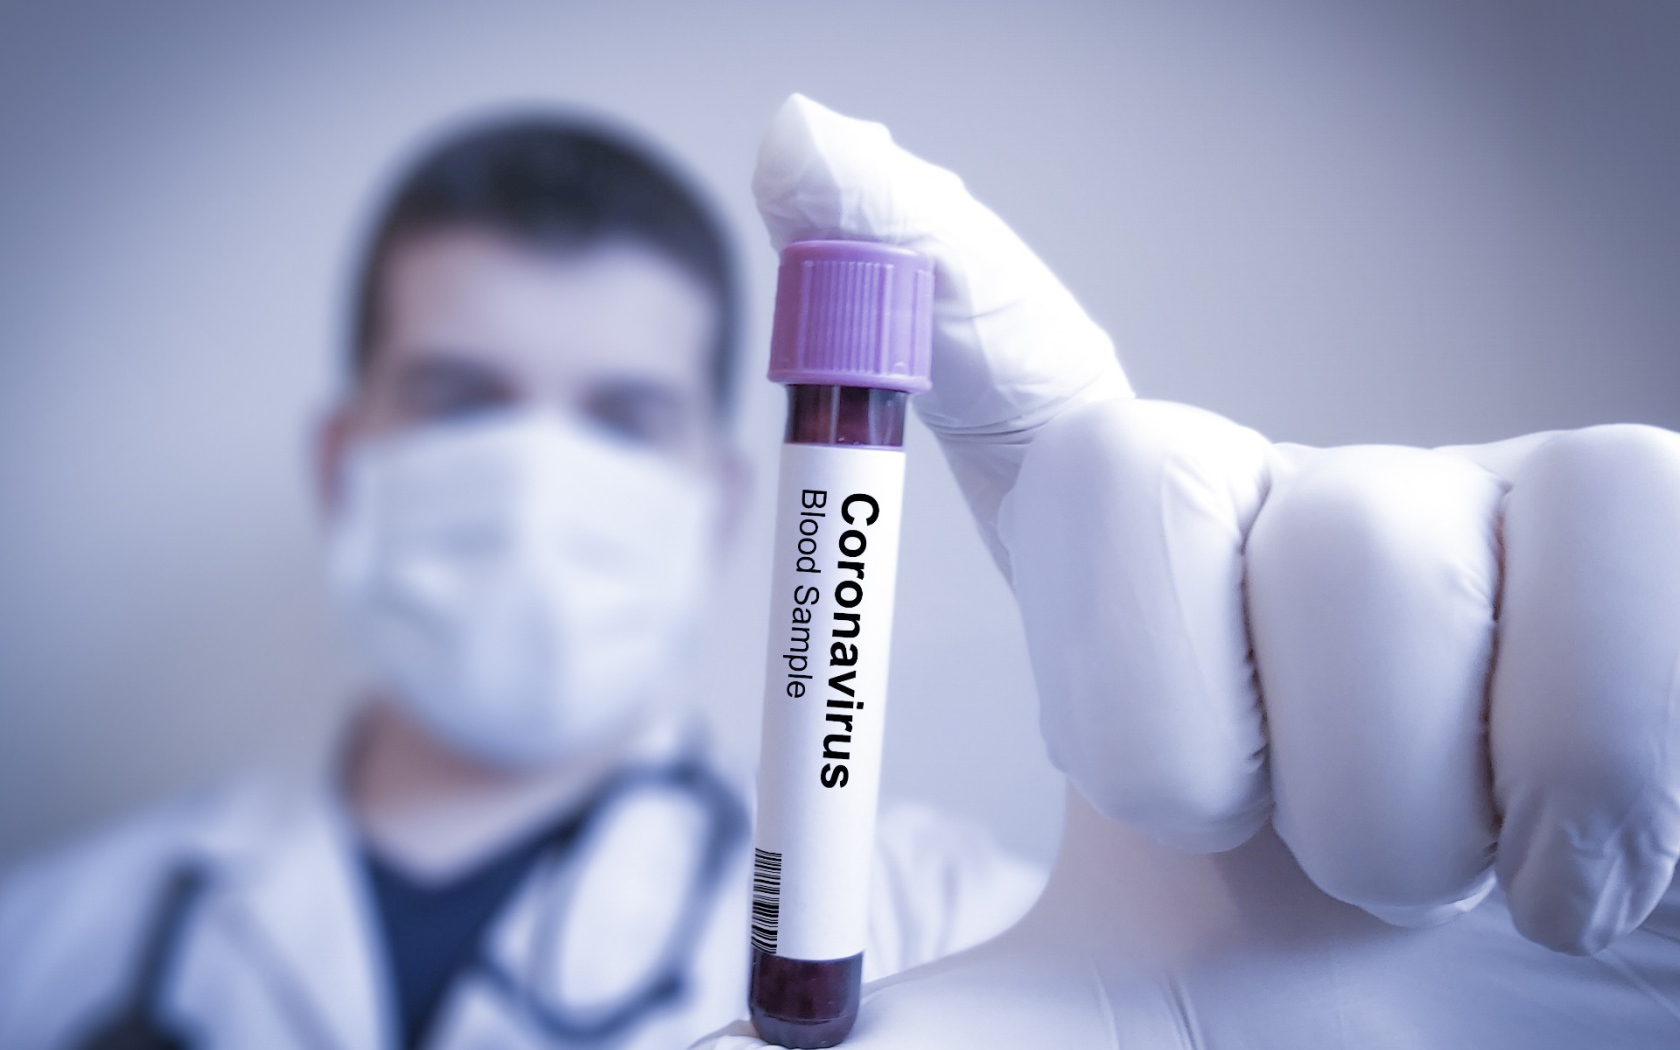 Assay for coronavirus covid-19 in vitro in hand